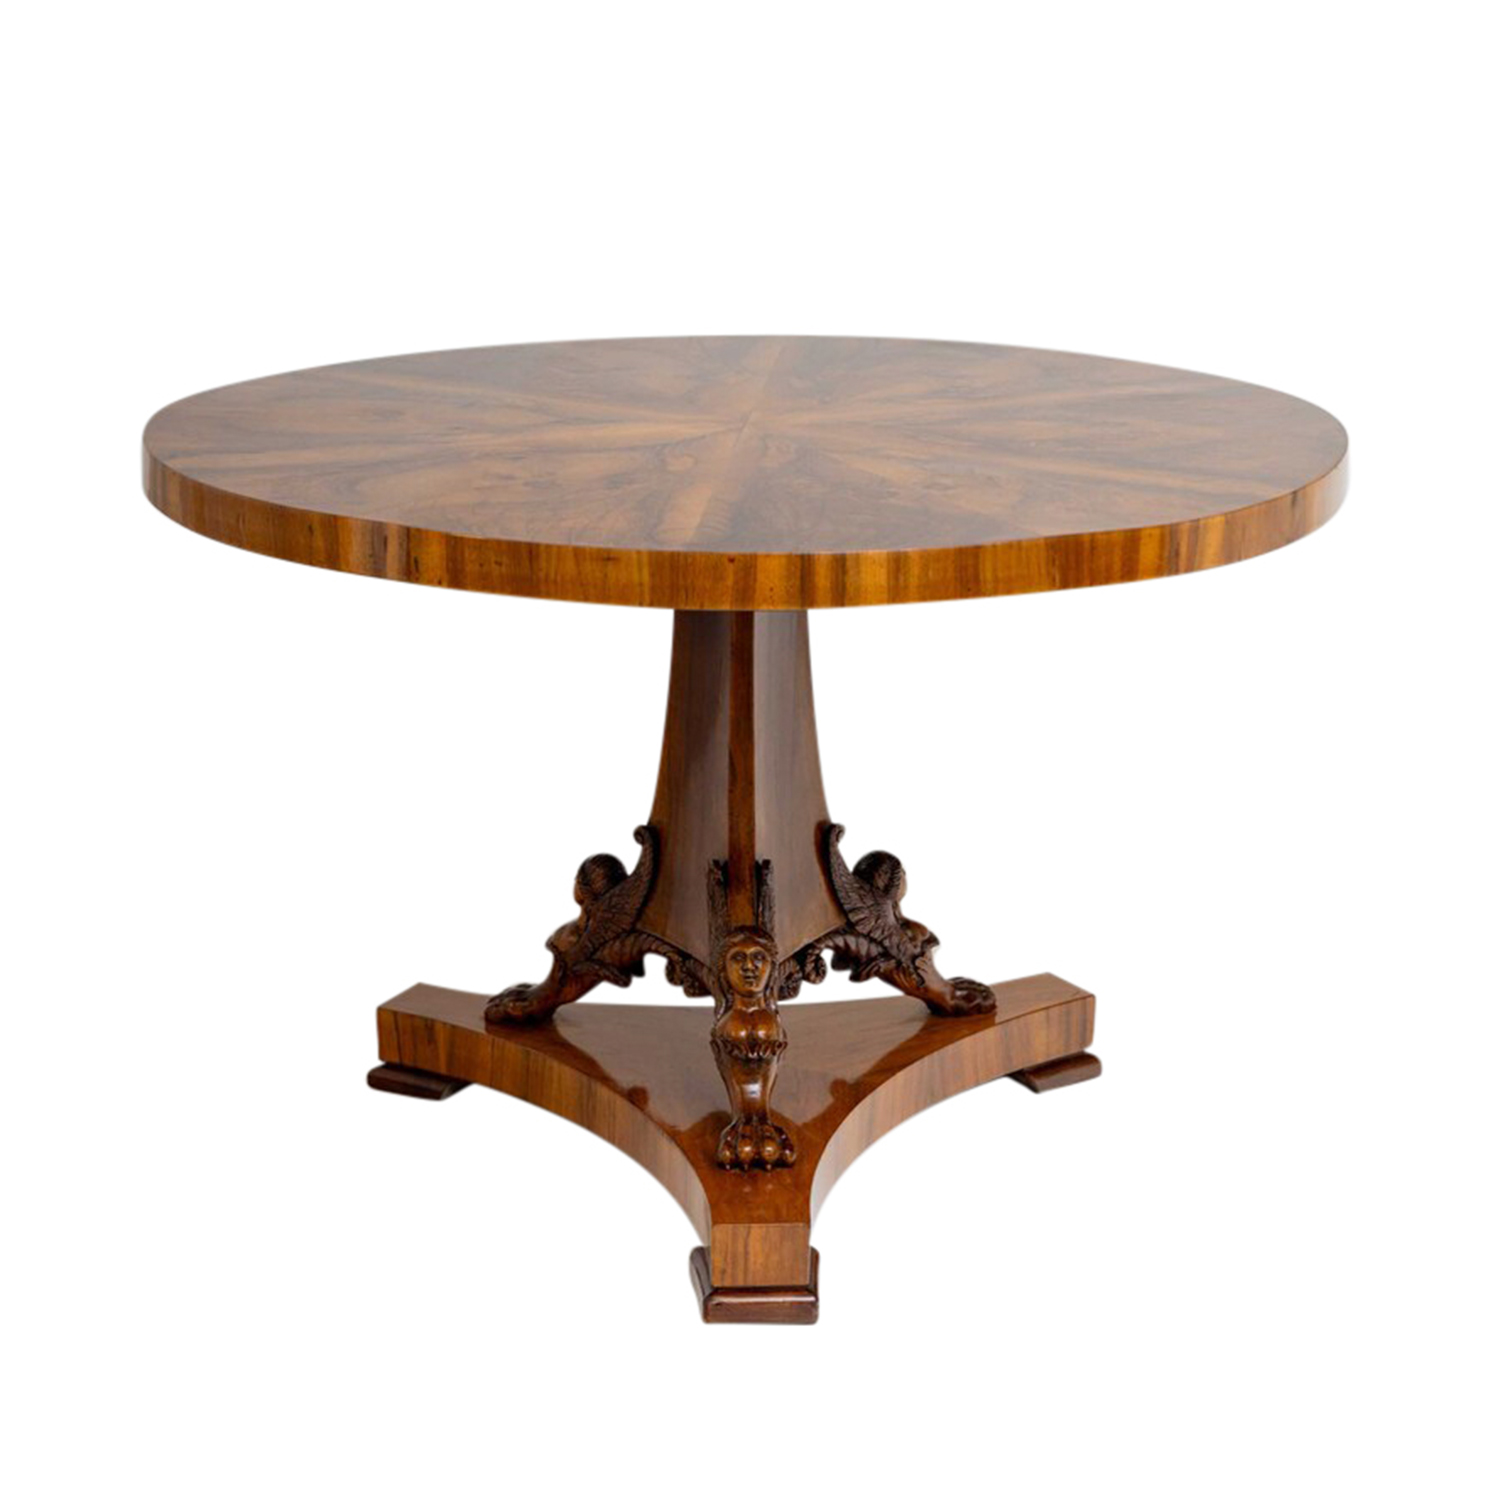 19th Century Austrian Biedermeier Walnut Salon Table – Antique Round Center Table